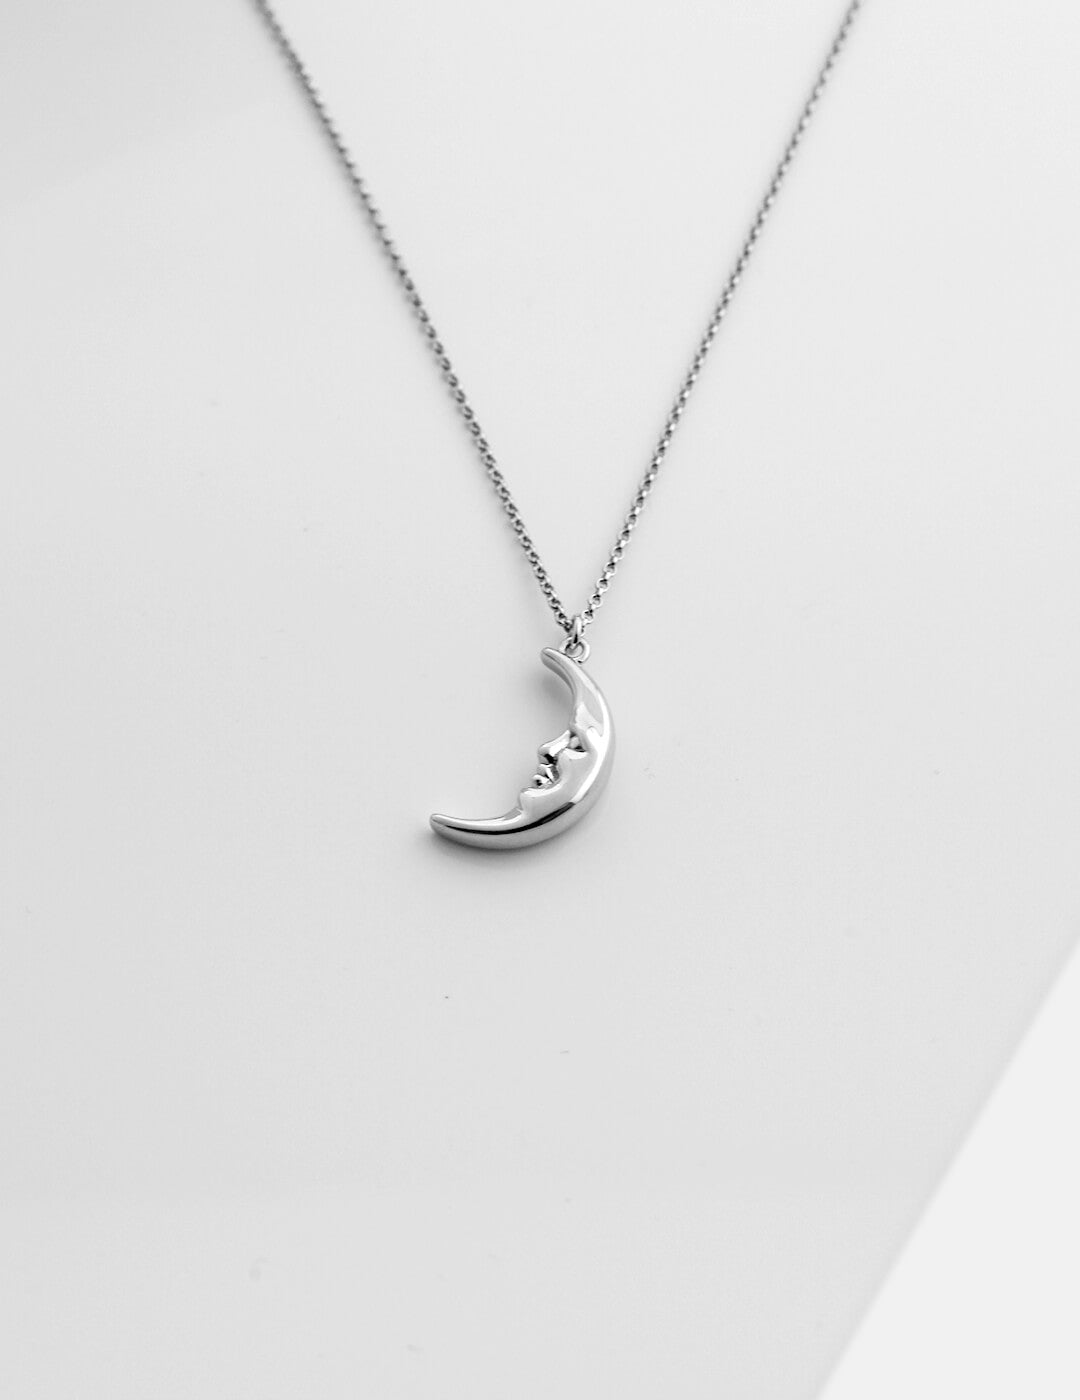 Lilyvot Jewelry Neoma Delicate Crescent Moon Pendant Necklace_4